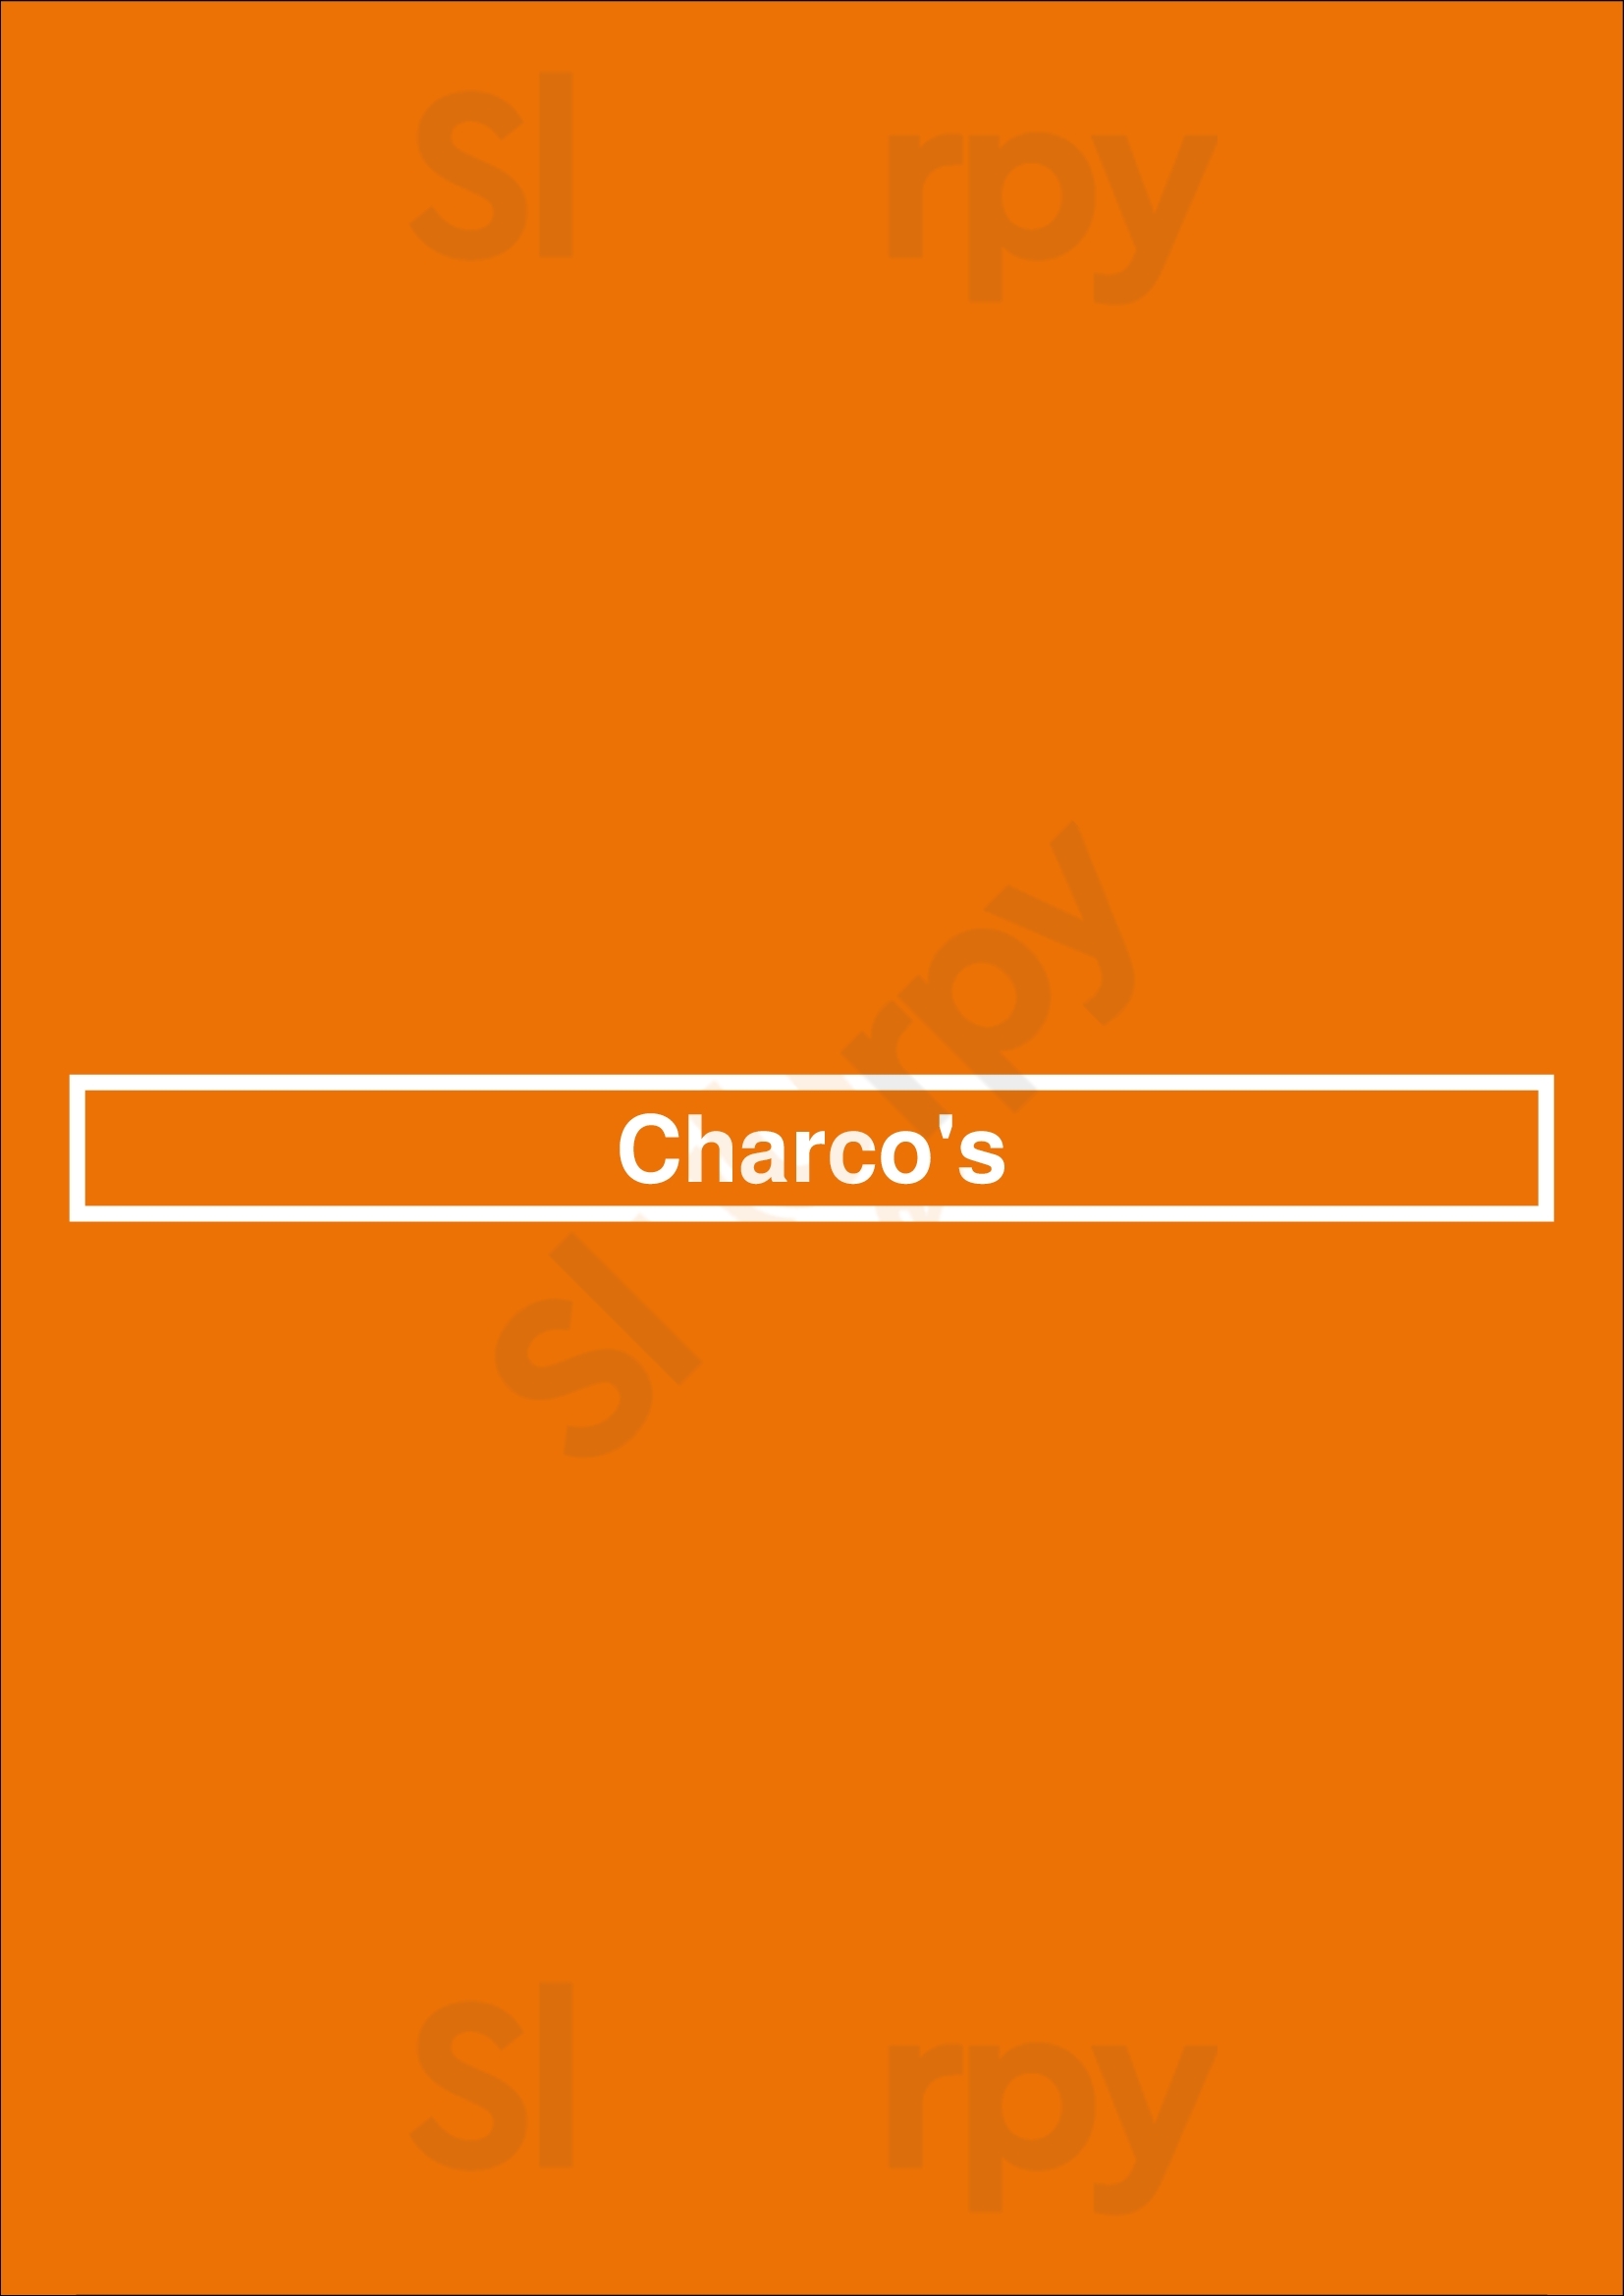 Charco's Leeds Menu - 1